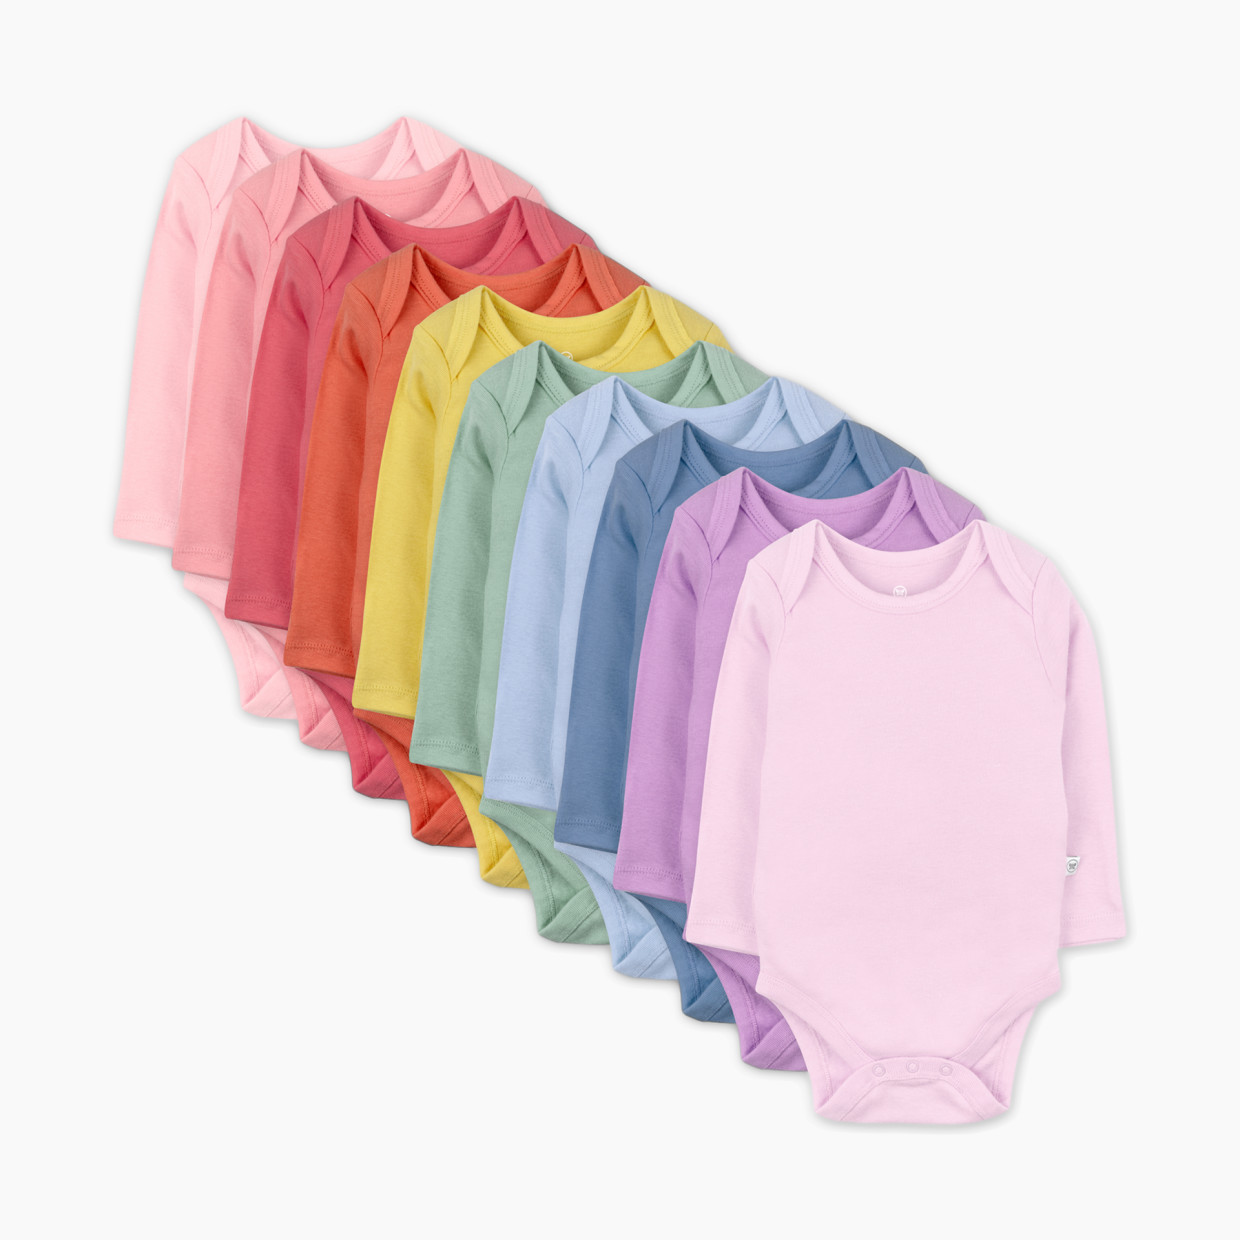 Honest Baby Clothing 10-Pack Organic Cotton Long Sleeve Bodysuits - Rainbow Gem Pinks, Nb, 10.